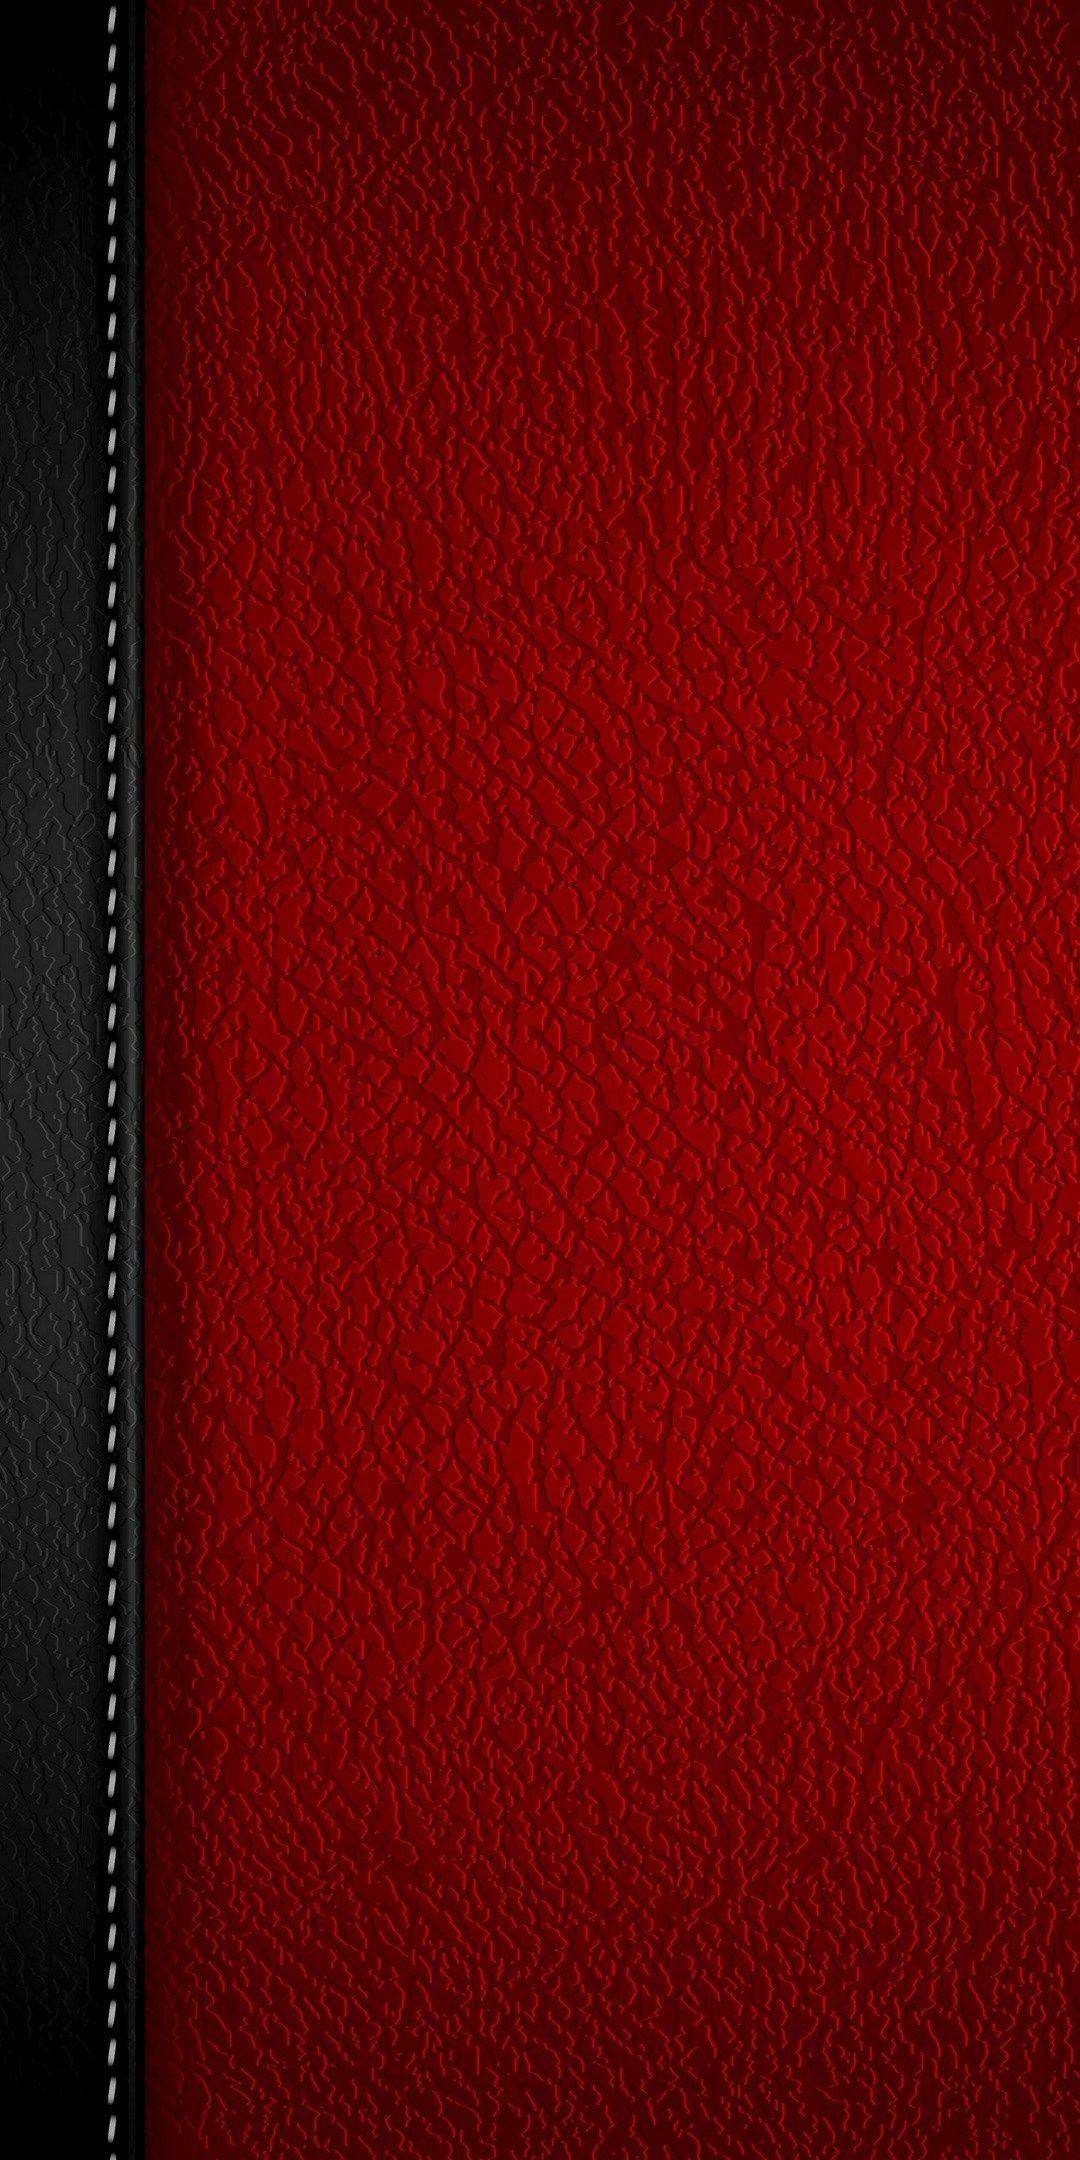 Leather Background Images  Free Download on Freepik